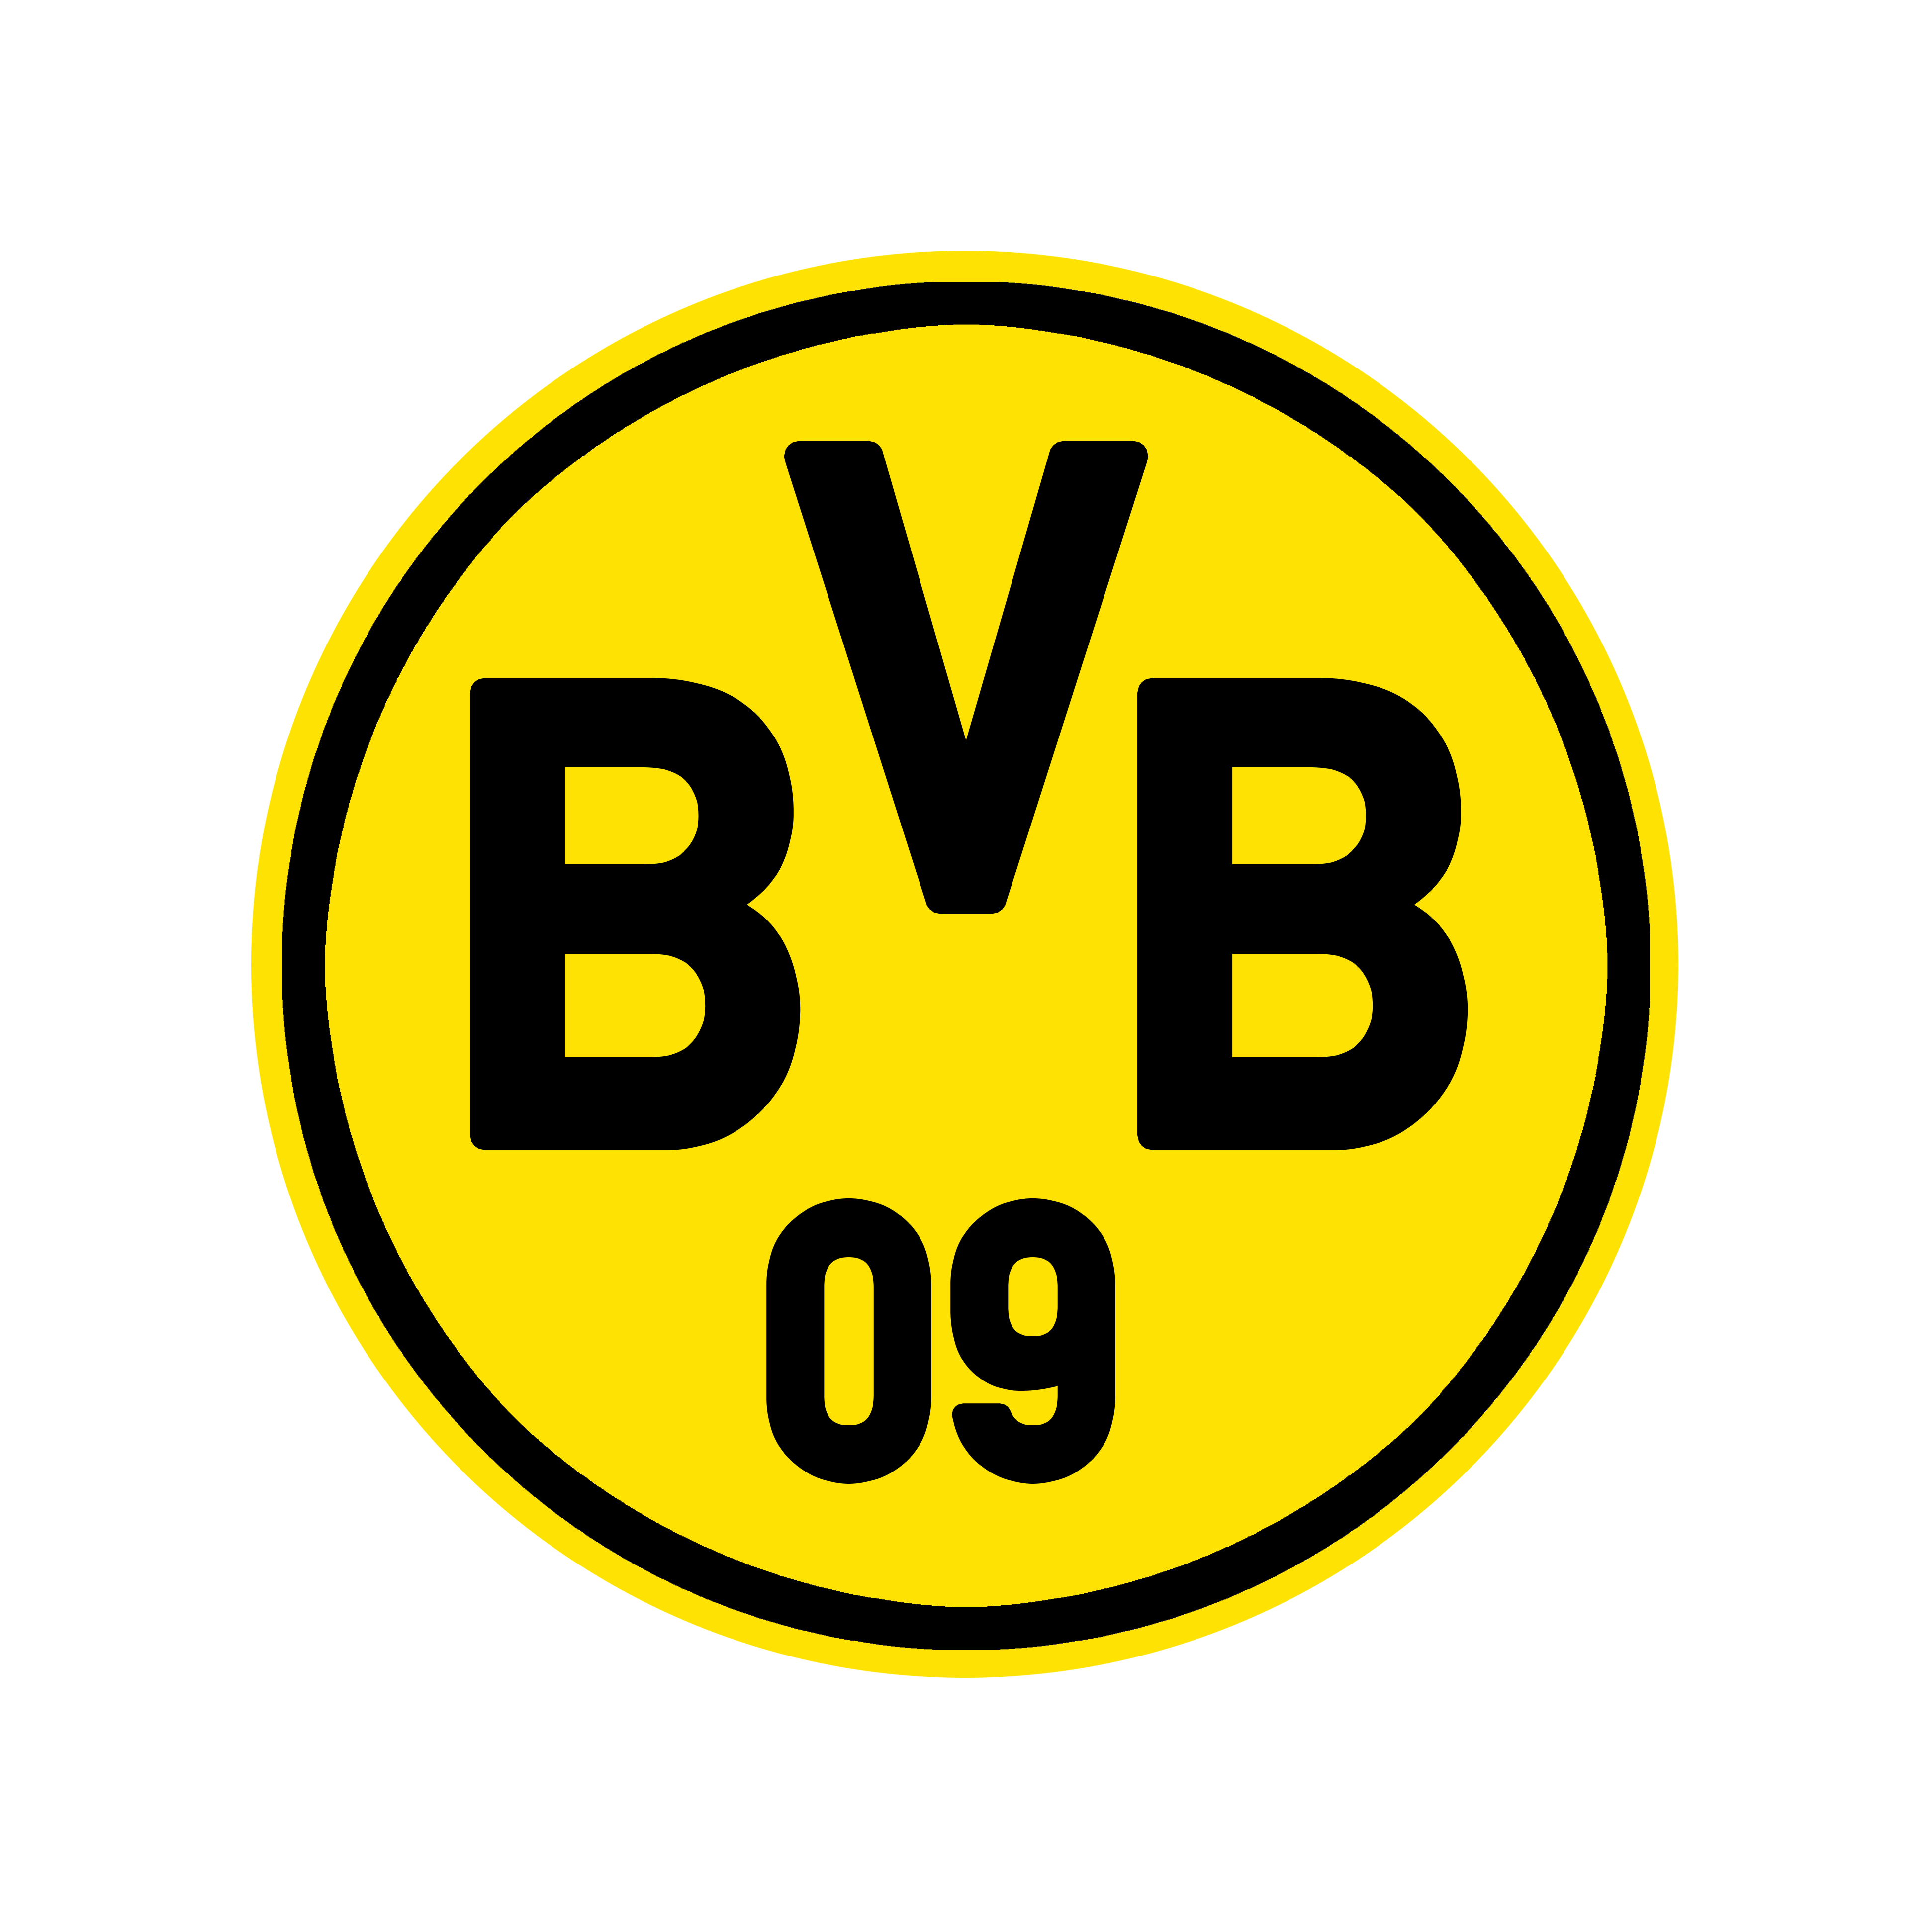 bvb logo grafik 01 3885x3885